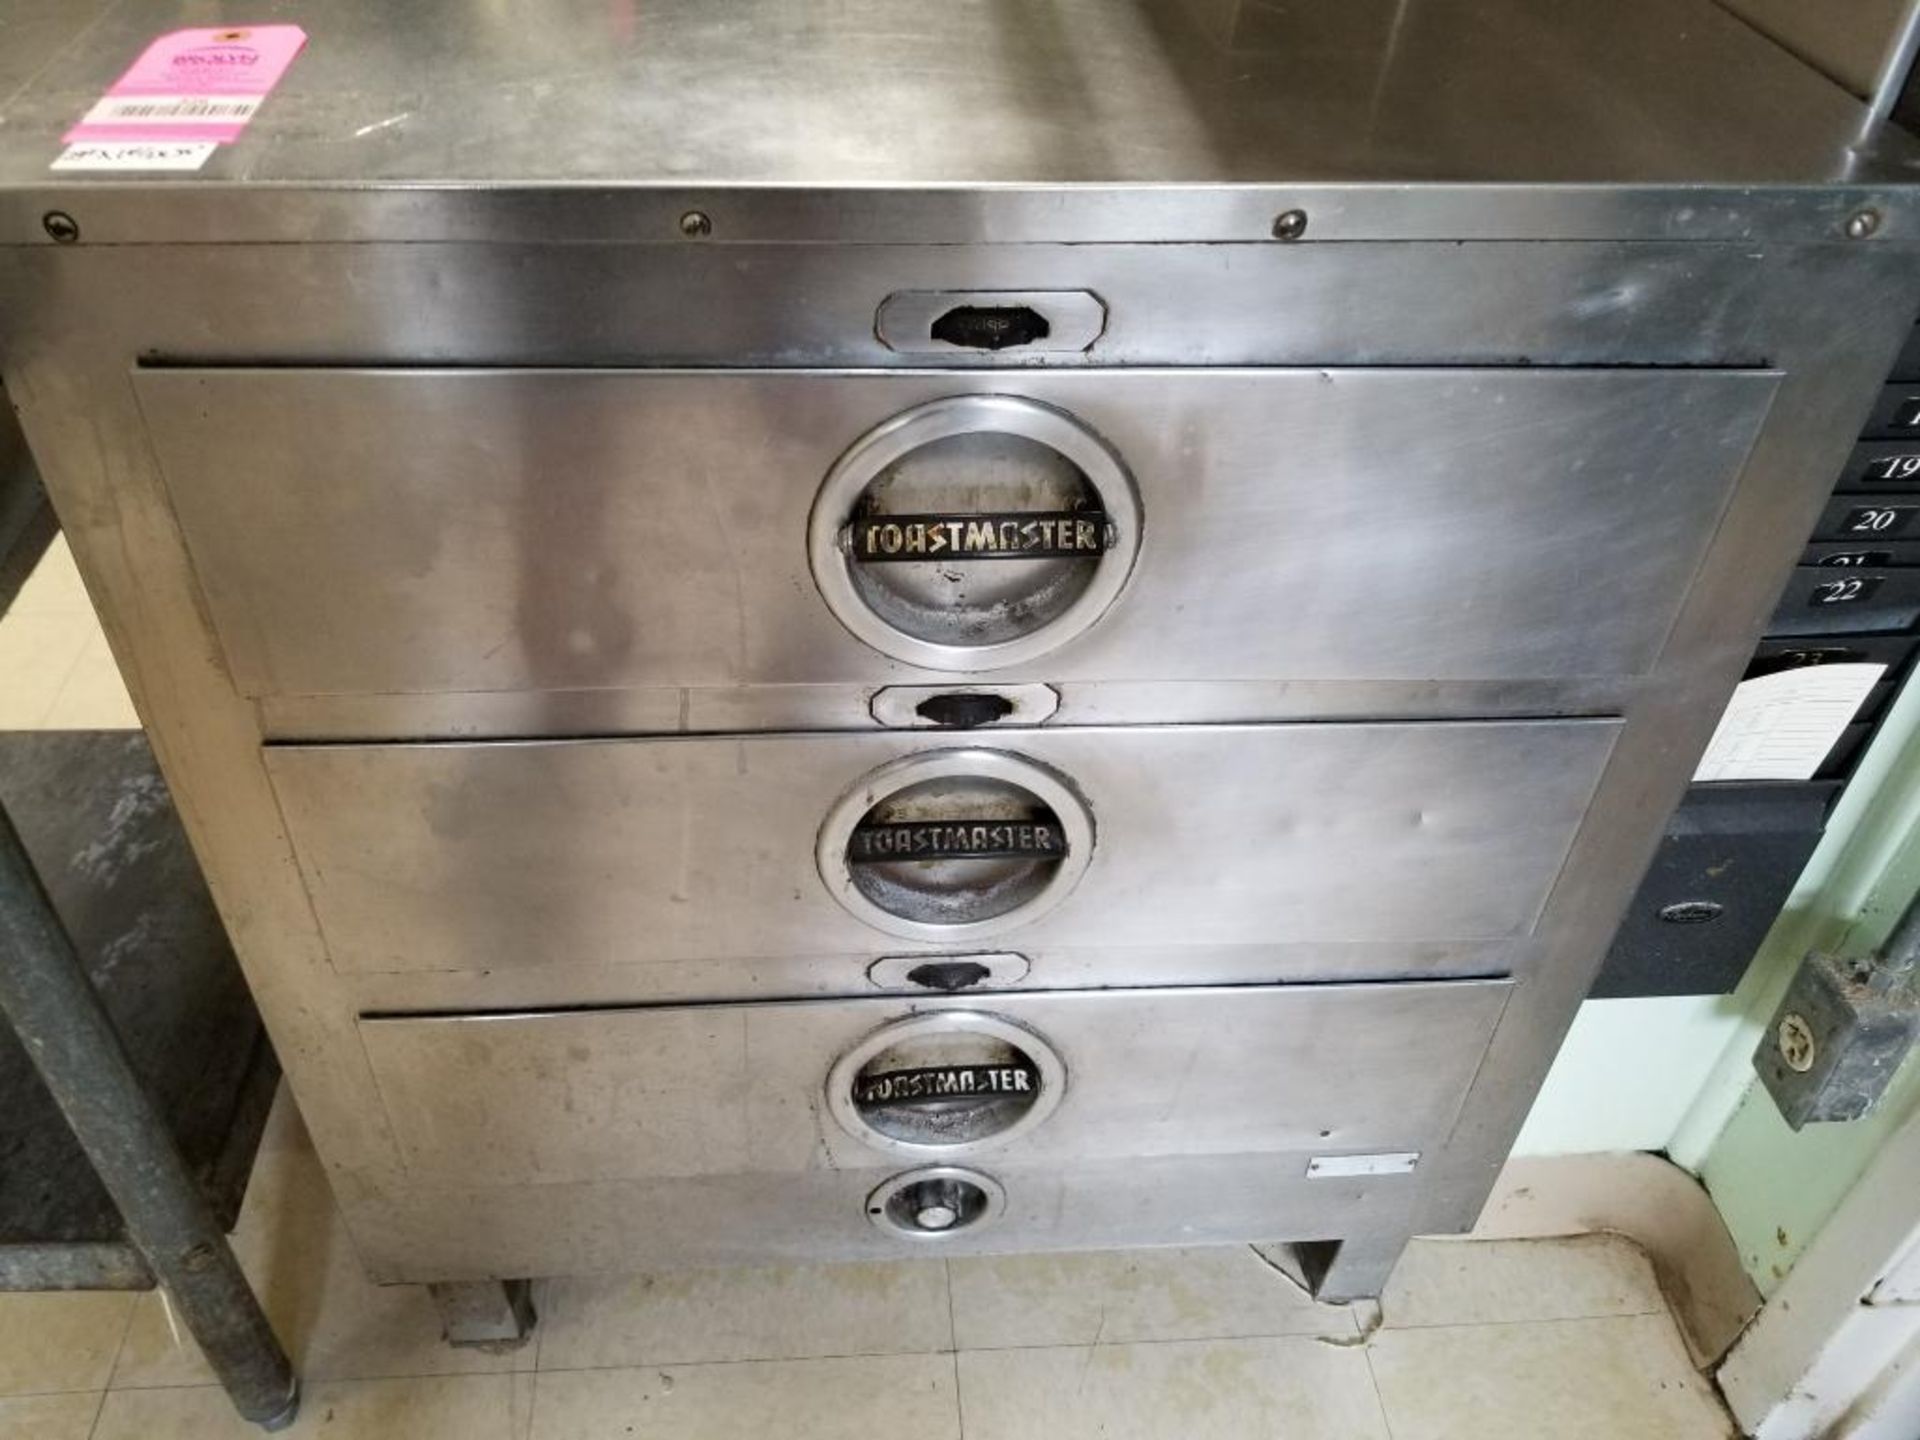 Toastmaster Commercial warmer drawer. Model 3C8XD. 120v single phase.